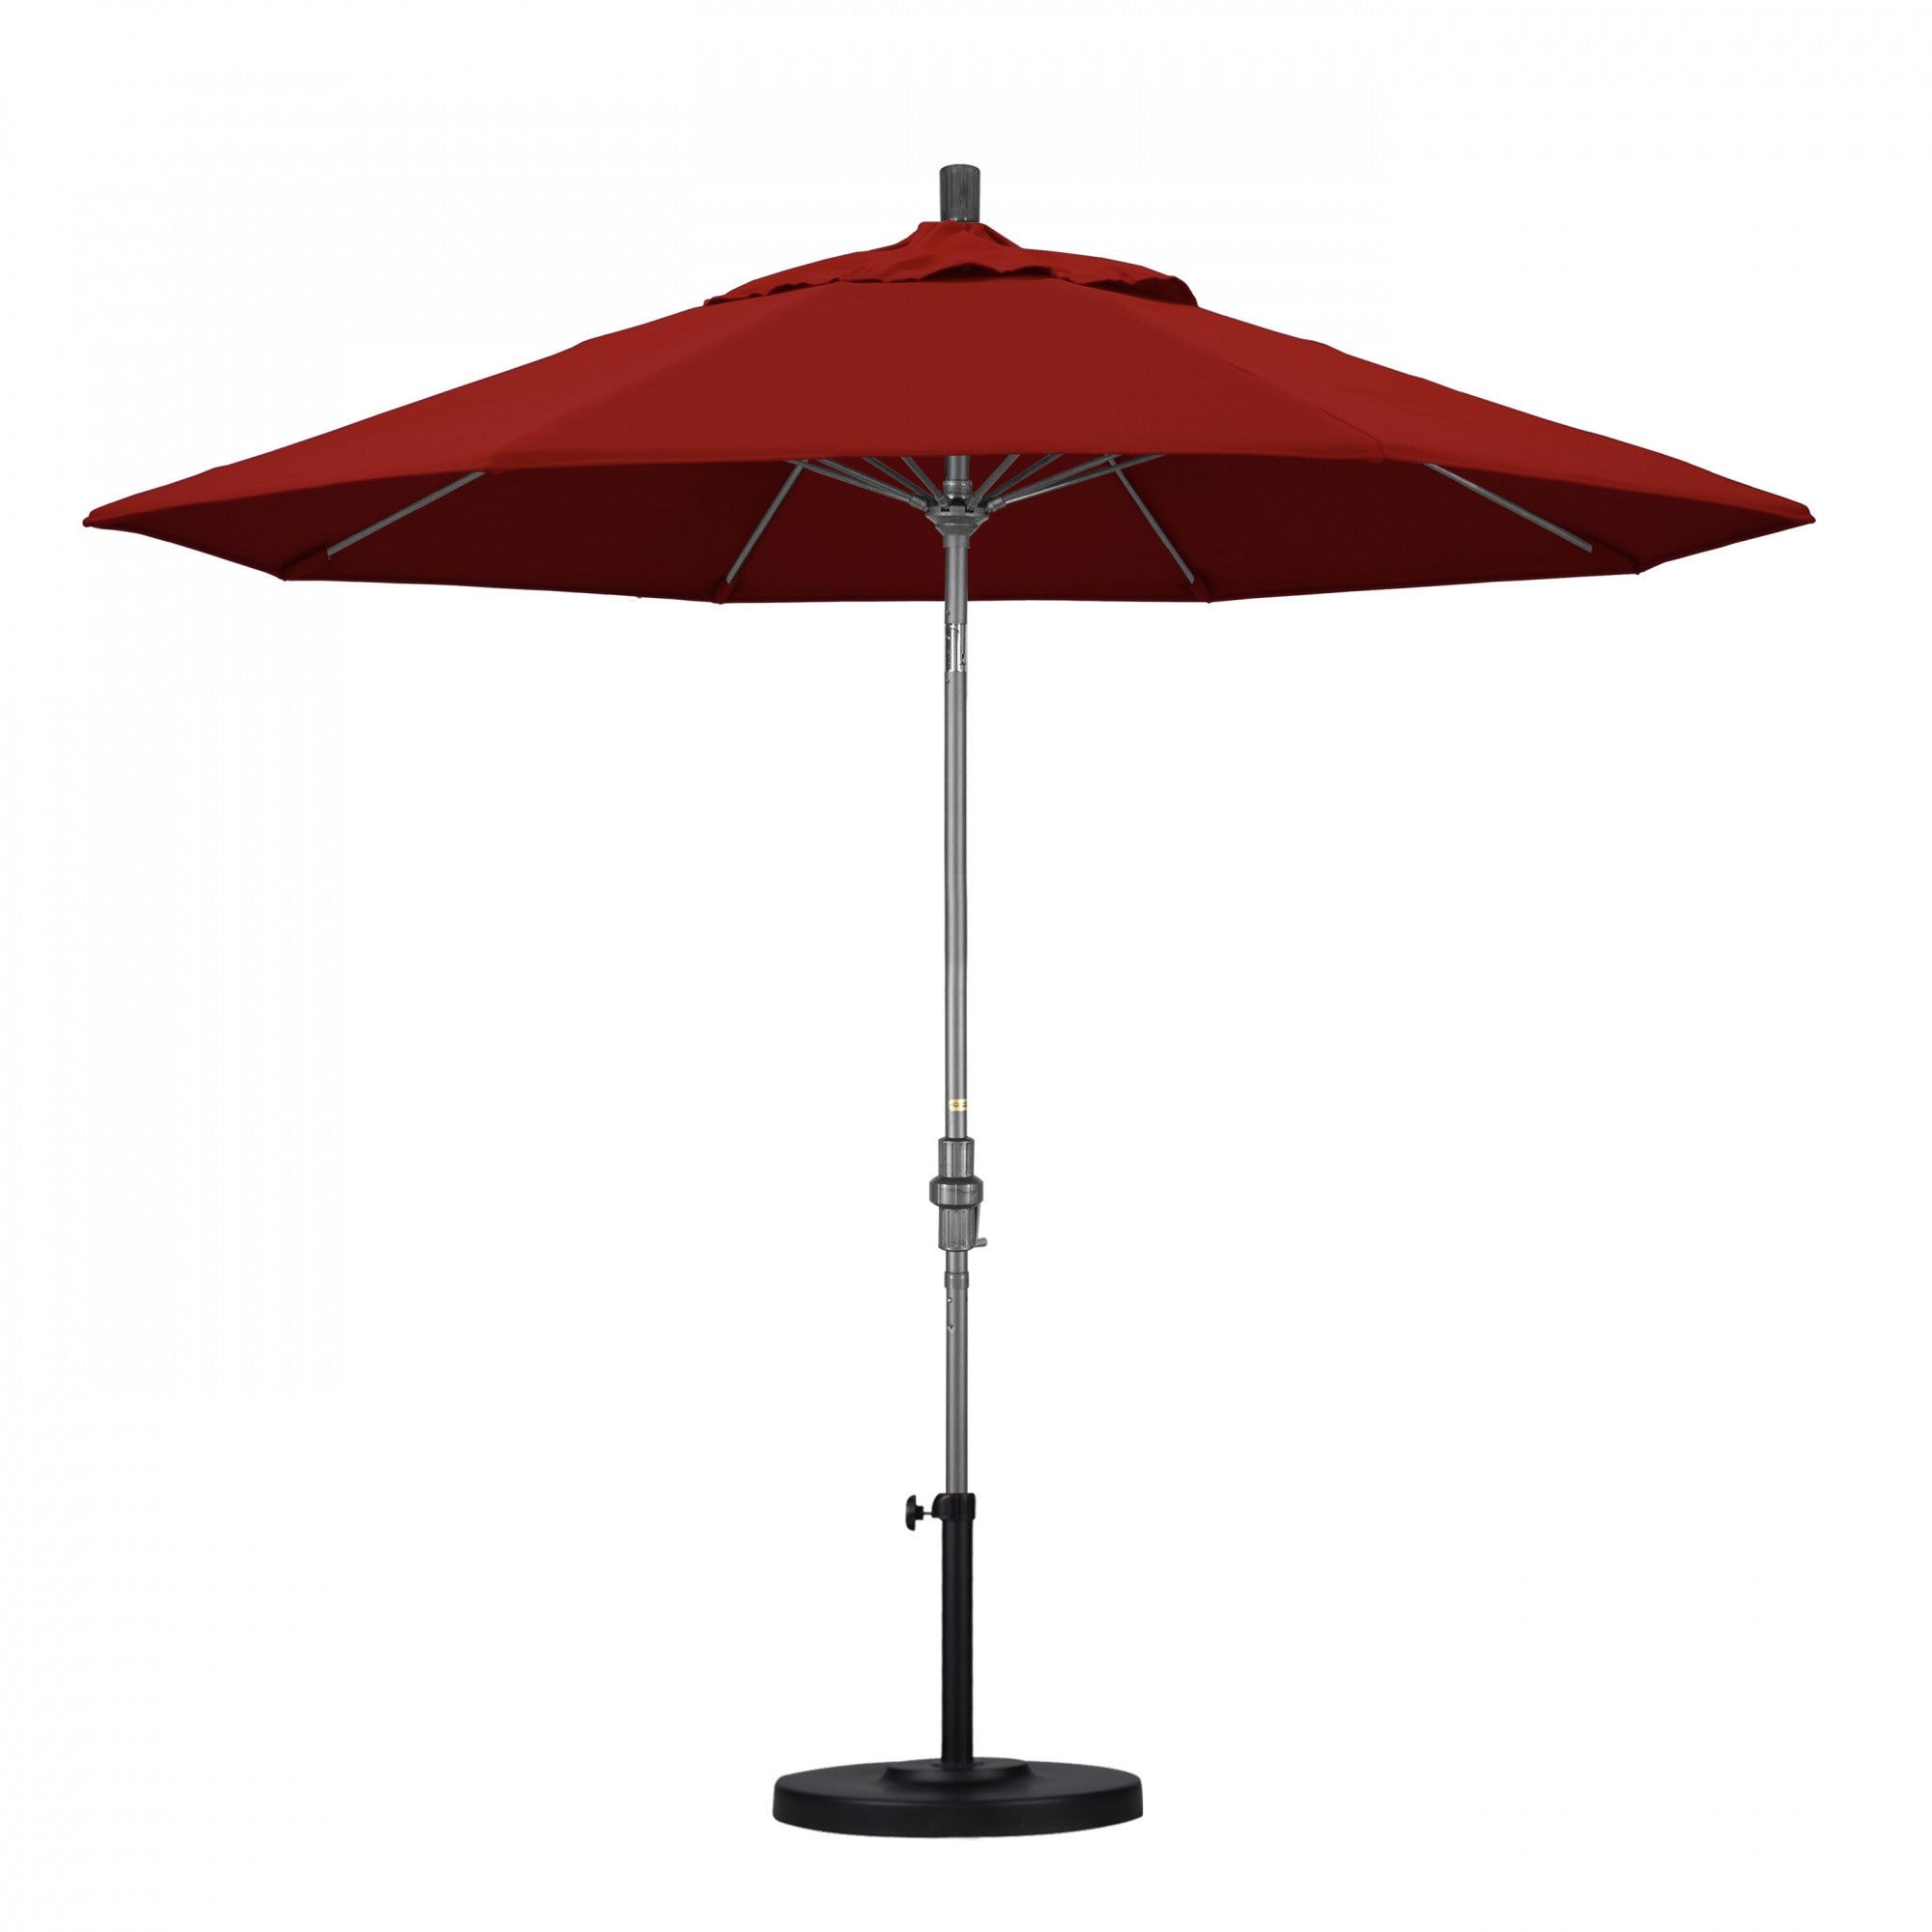 California Umbrella - 9' - Patio Umbrella Umbrella - Aluminum Pole - Jockey Red - Sunbrella  - GSCUF908010-5403